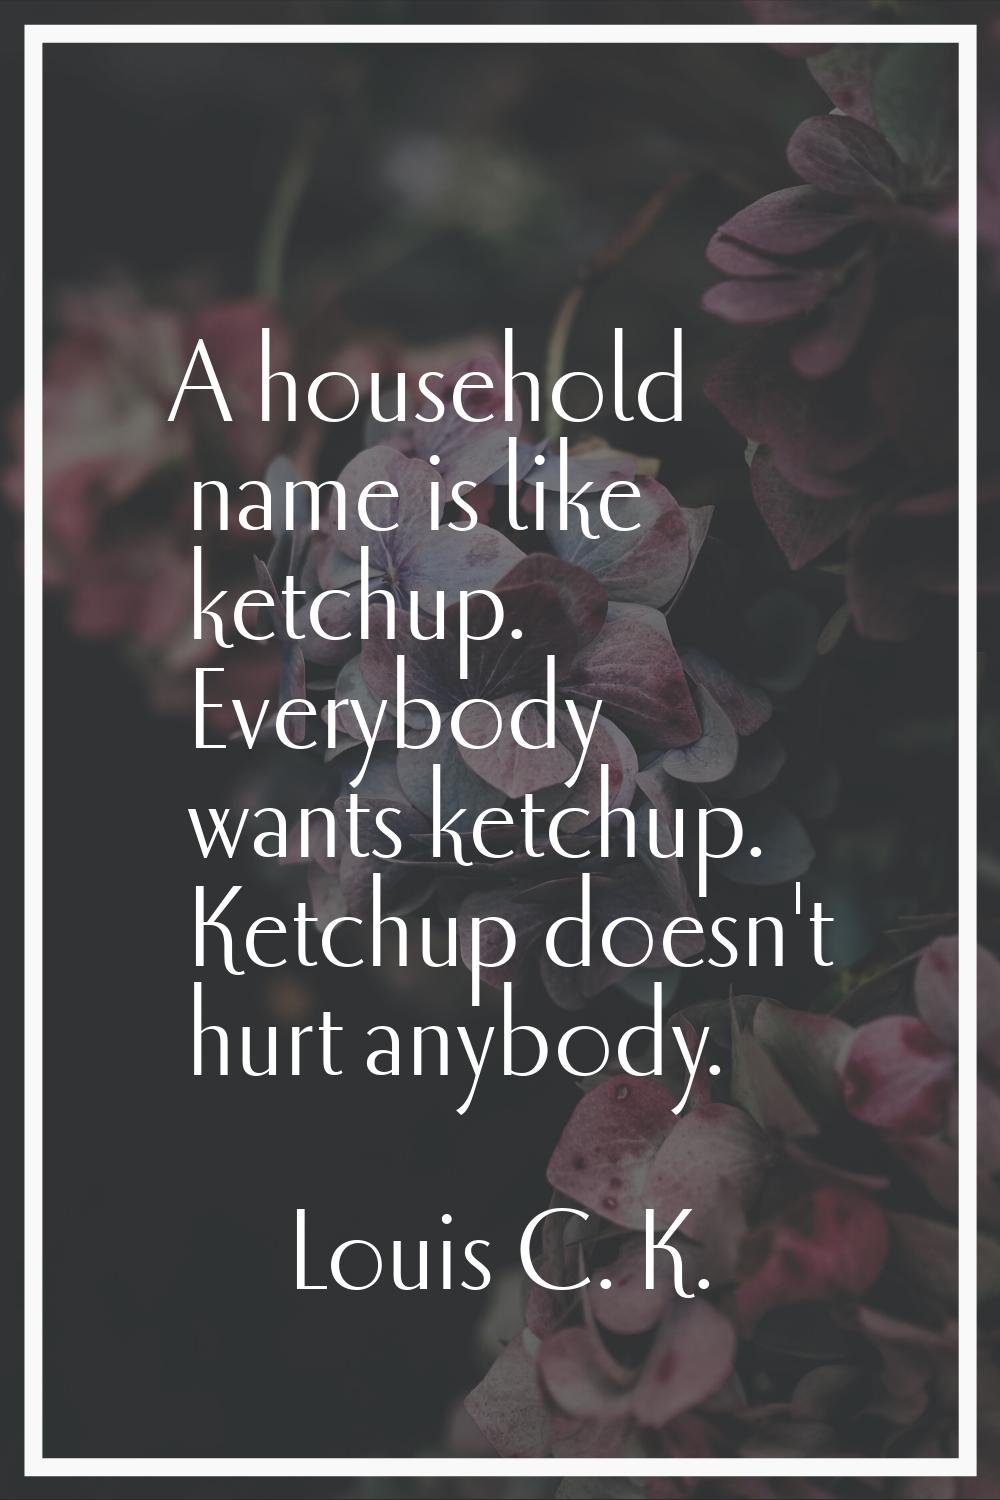 A household name is like ketchup. Everybody wants ketchup. Ketchup doesn't hurt anybody.